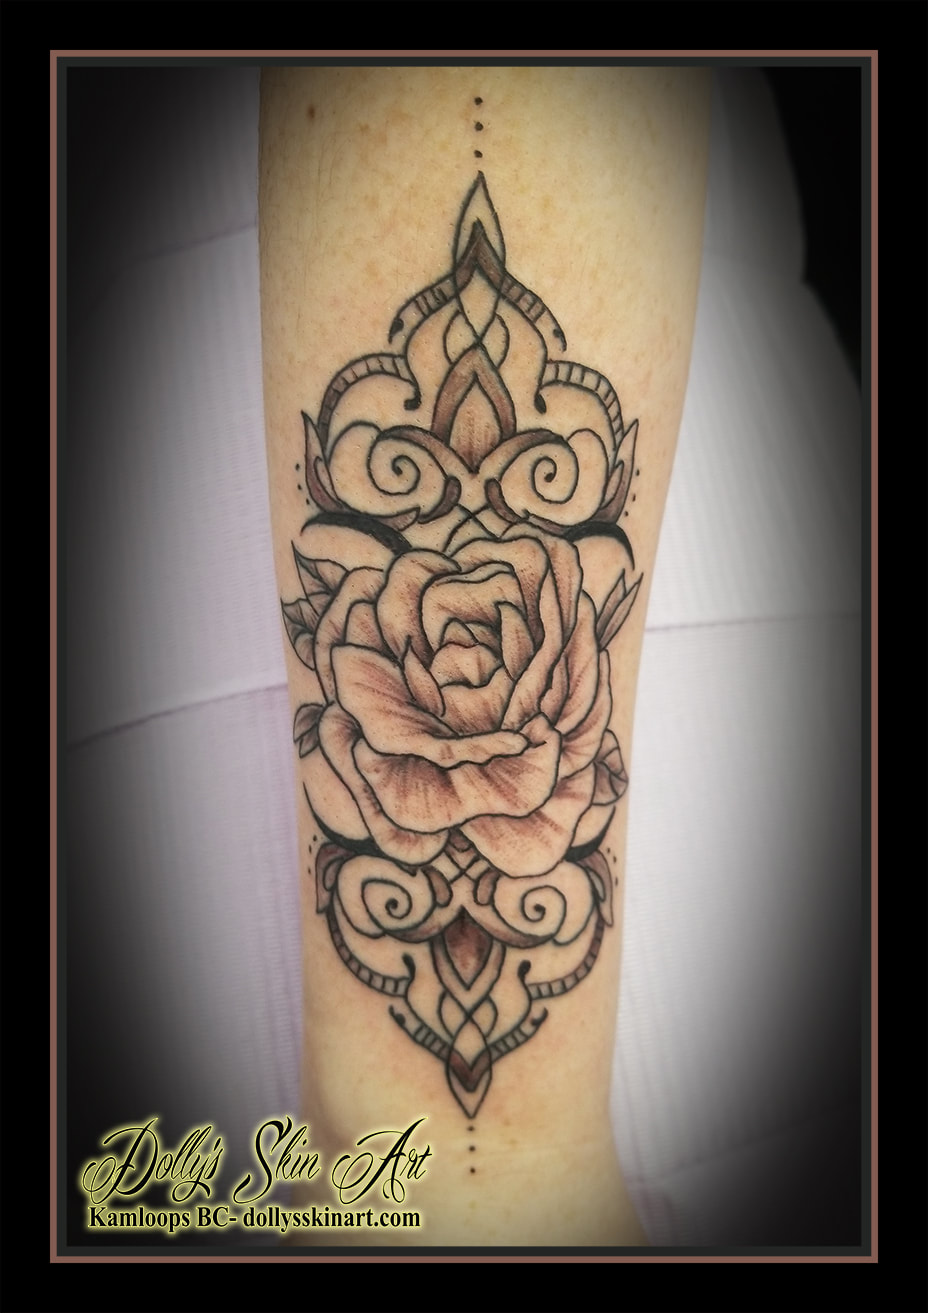 rose tattoo wrist cuff black and grey shading filigree forearm tattoo kamloops dolly's skin art